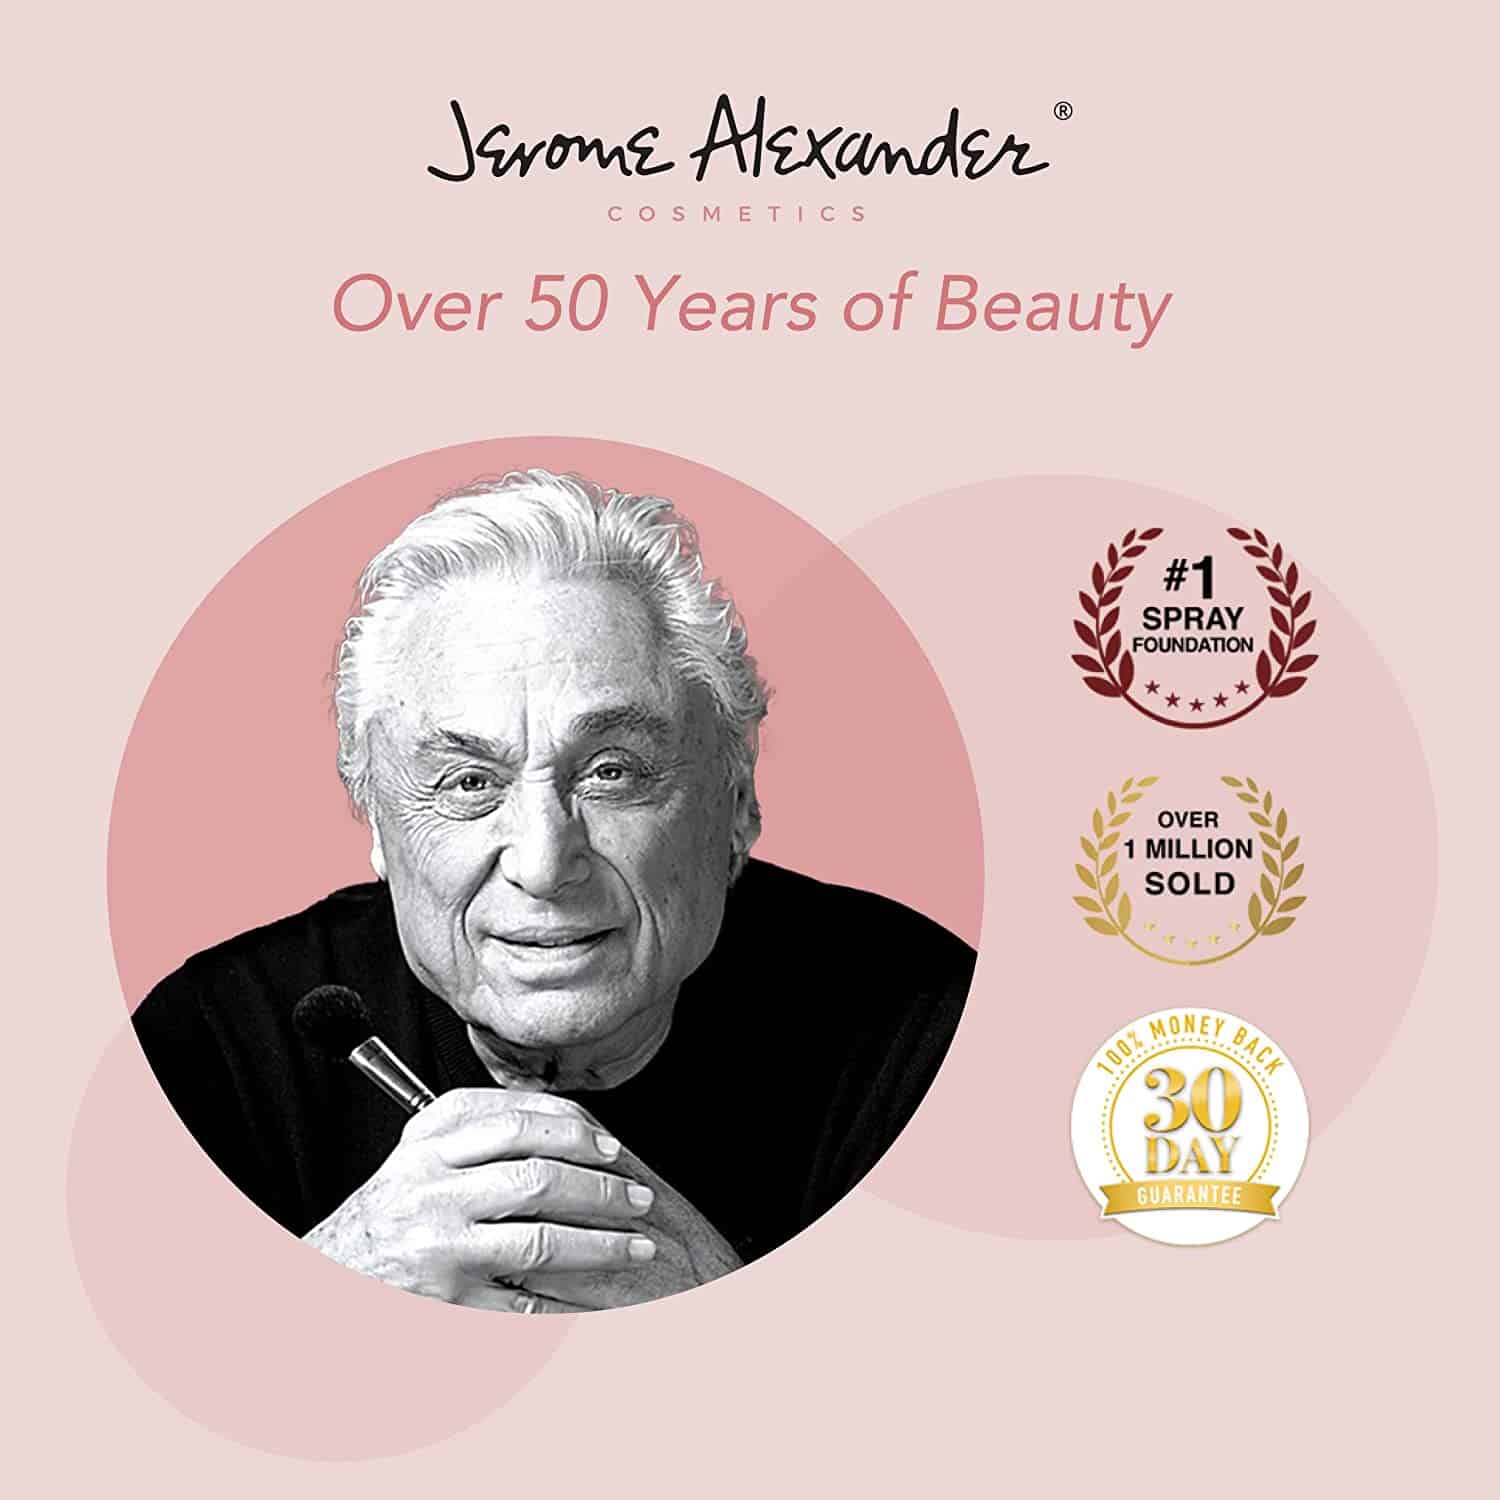 Jerome Alexander Airbrush Foundation Reviews